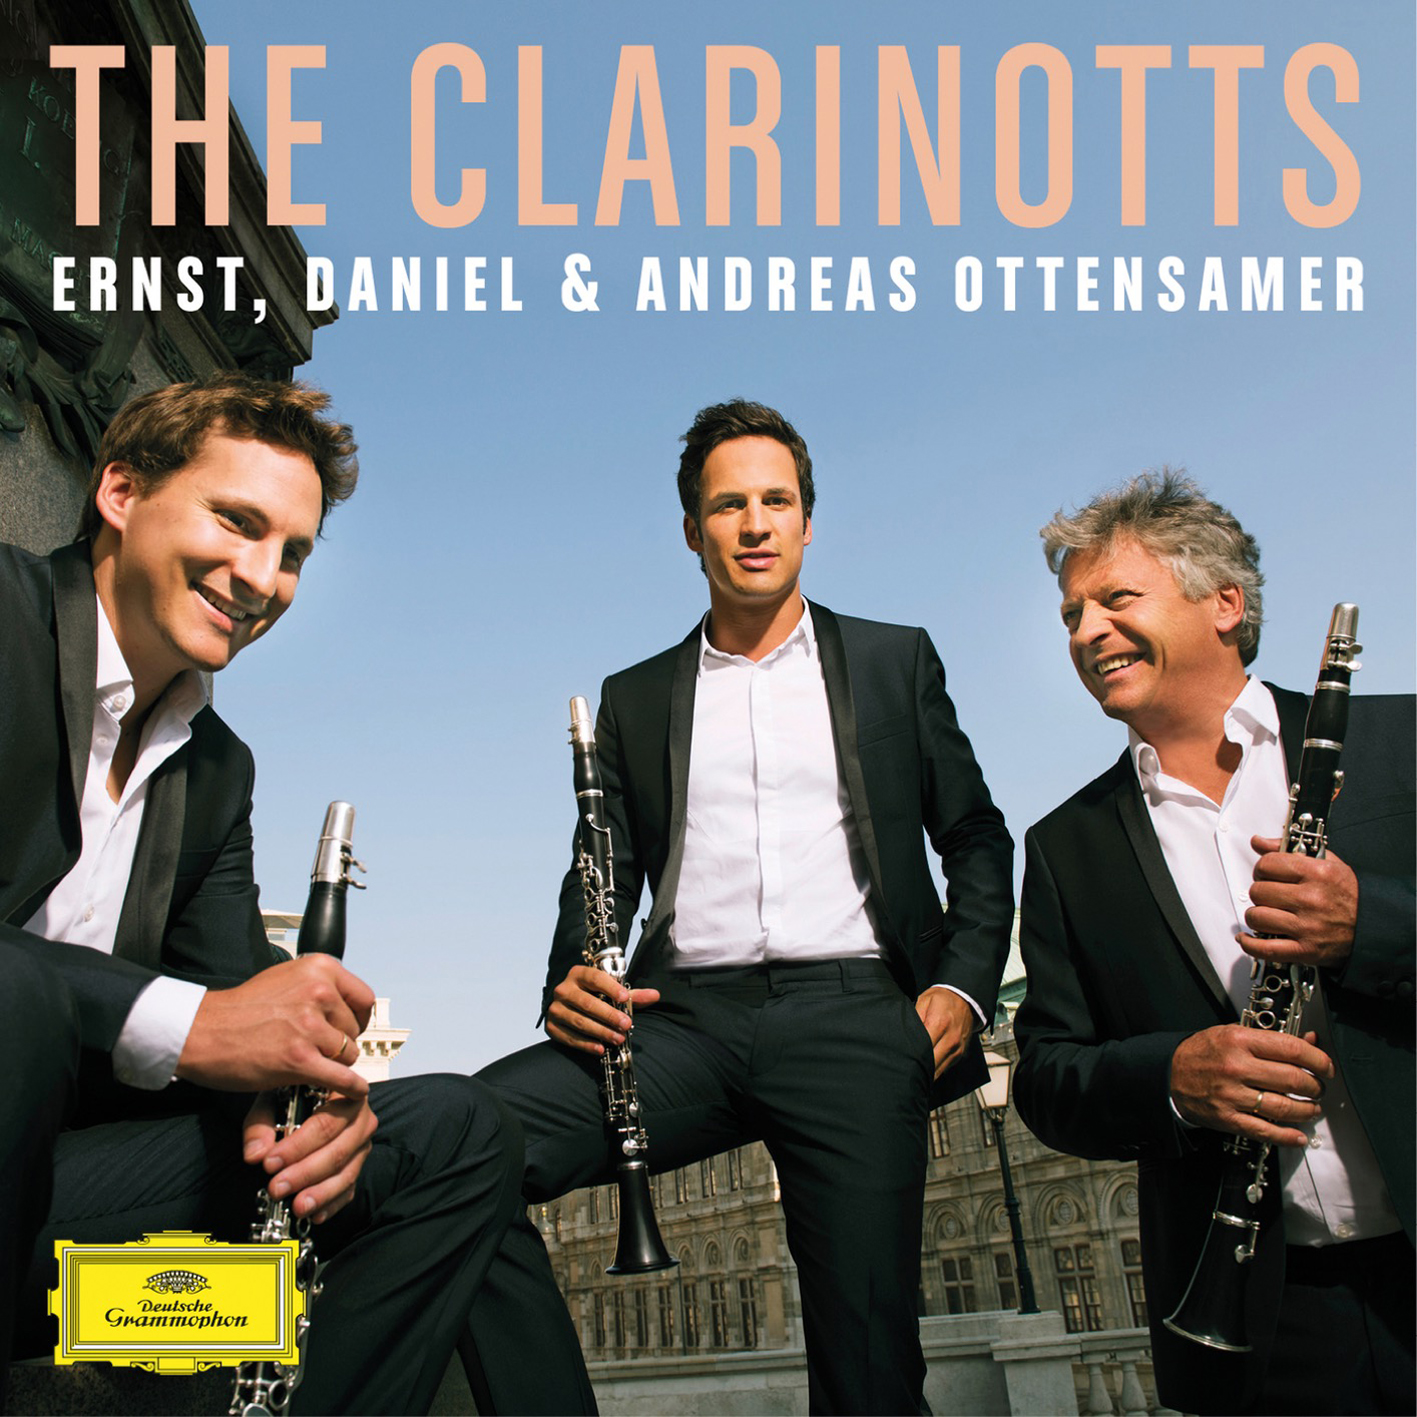 The Clarinotts - Ernst, Daniel & Andreas Ottensamer (2016) [HighResAudio FLAC 24bit/96kHz]